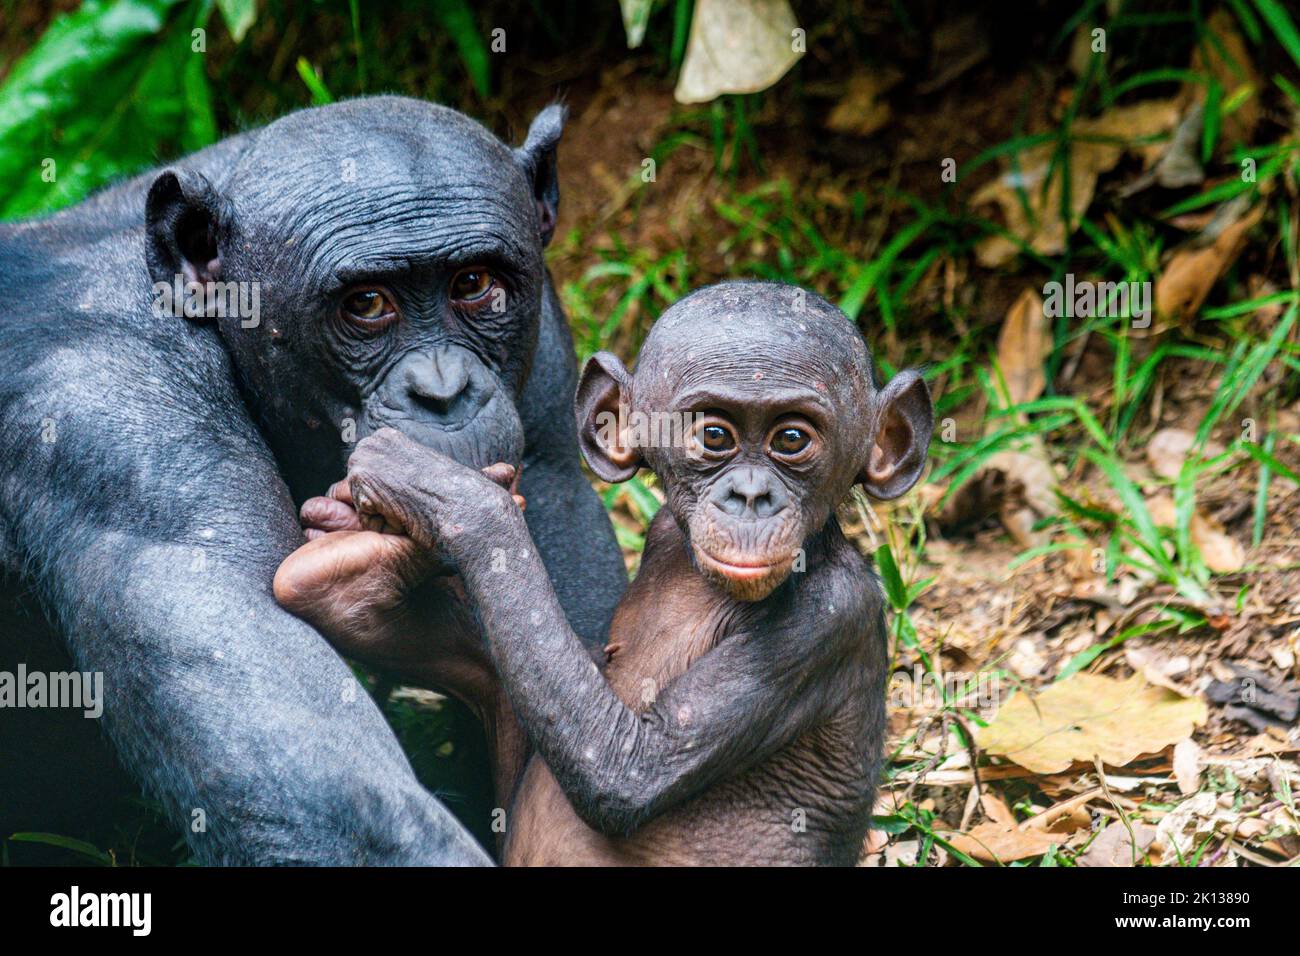 Bonobo (Pan paniscus), Lola ya Bonobo sanctuary, Kinshasa, Democratic Republic of the Congo, Africa Stock Photo